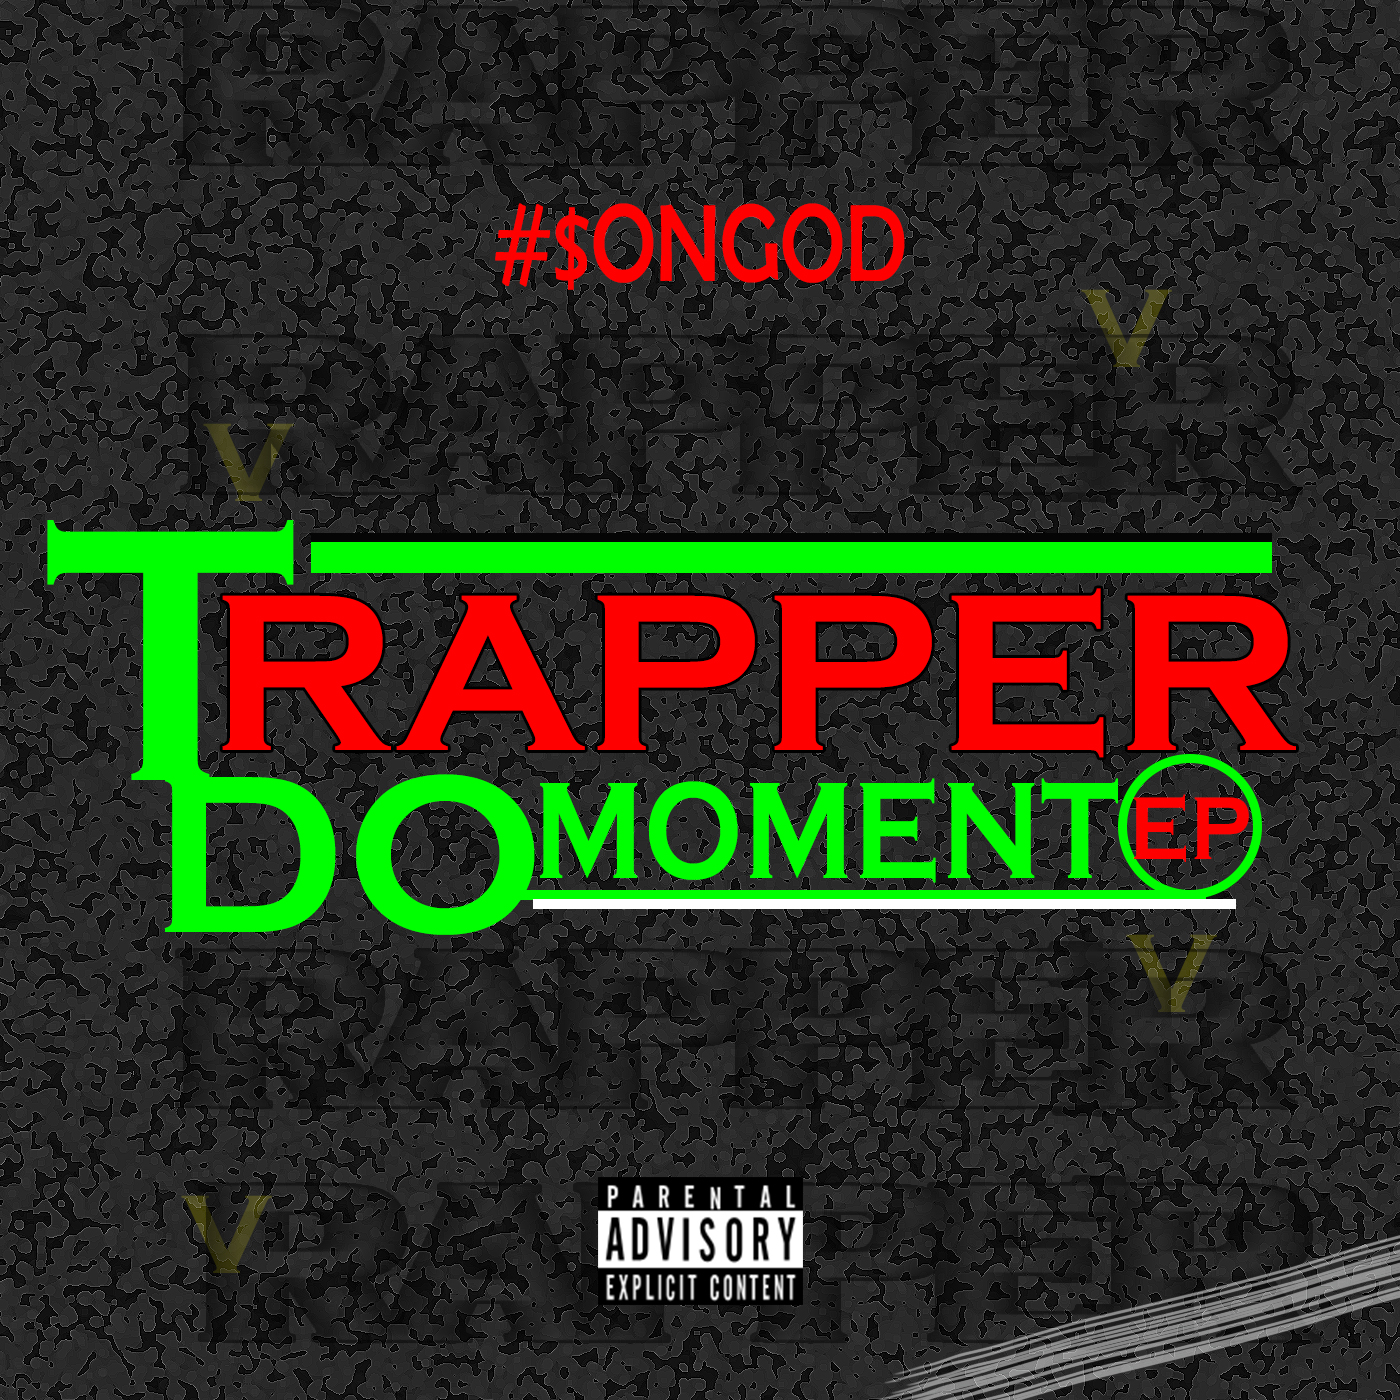 Son God – Trepper do Momento (EP)